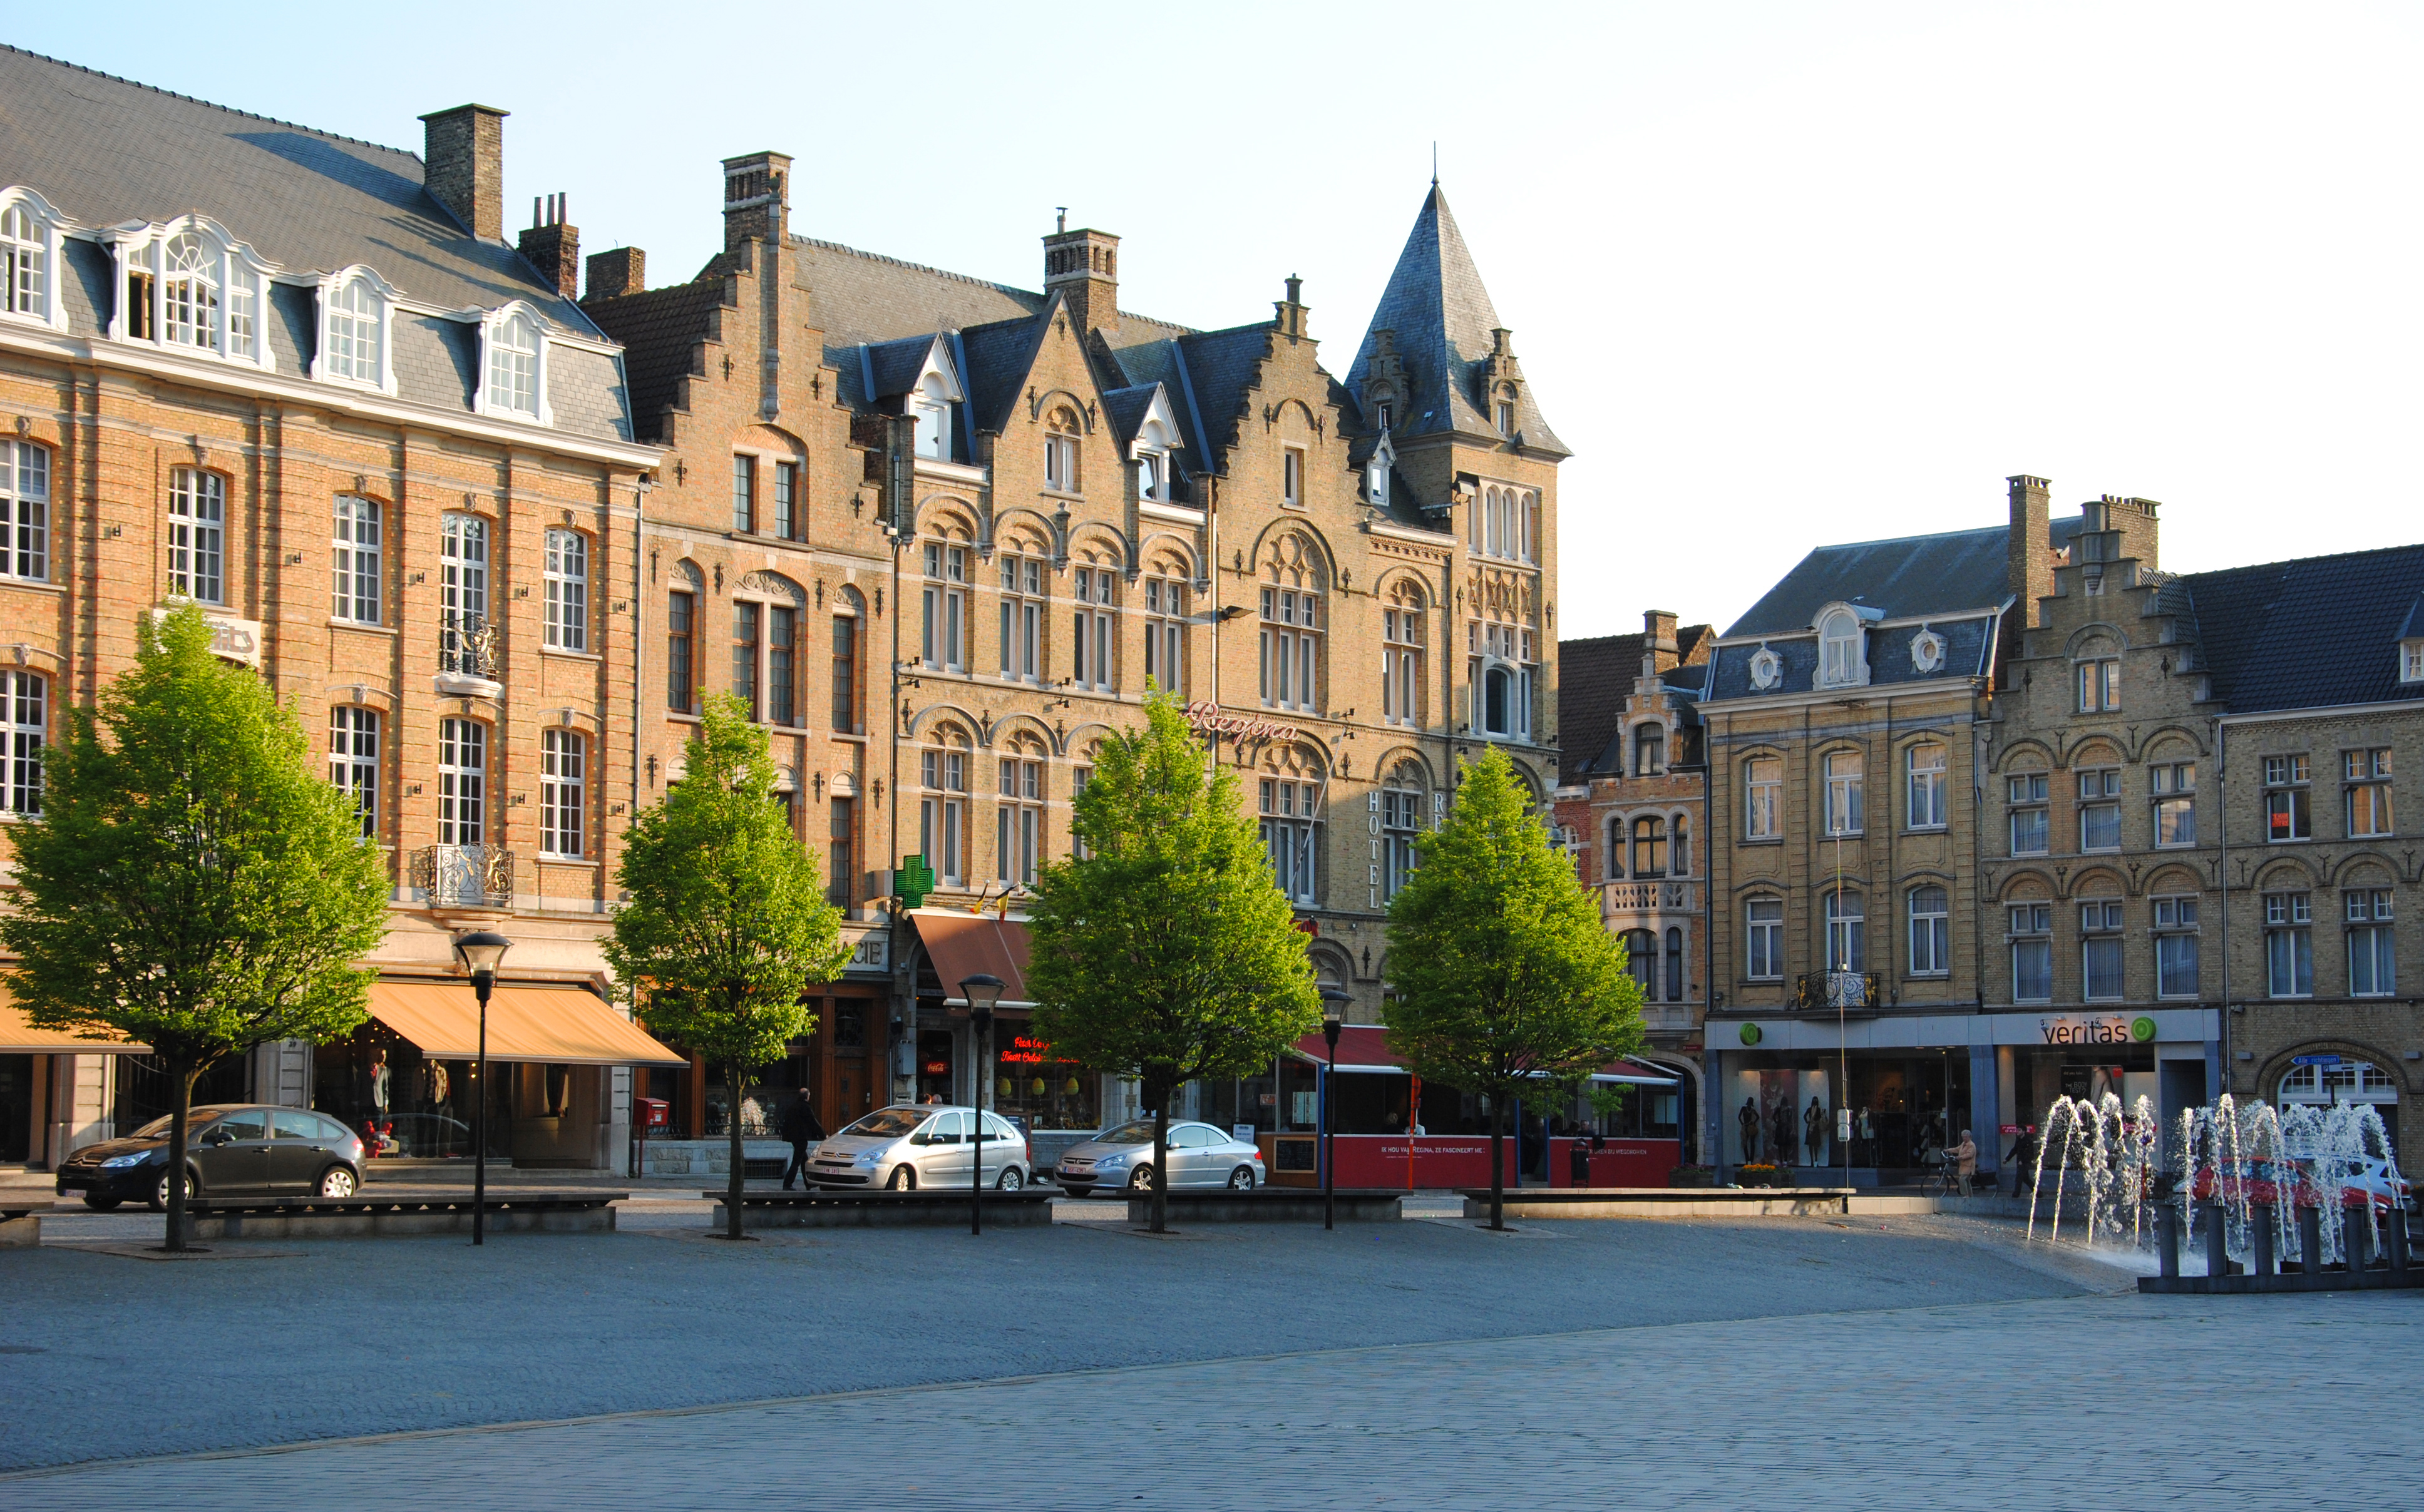 https://upload.wikimedia.org/wikipedia/commons/1/15/Belgian-city-ypres.jpg